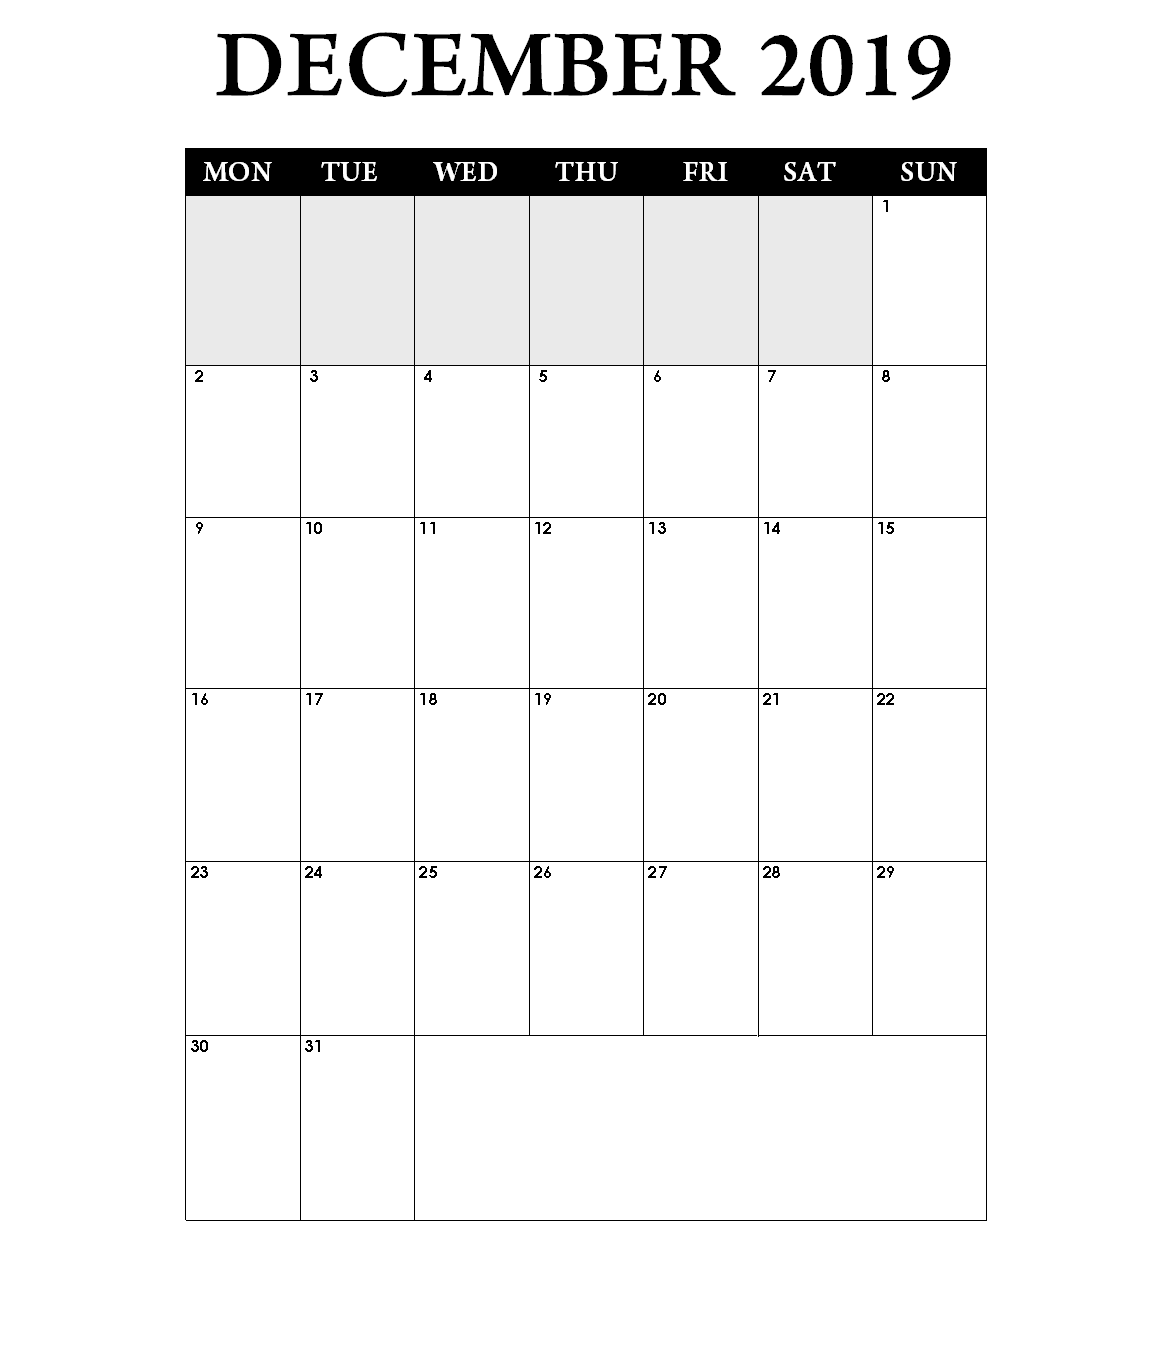 December 2019 Monthly Planner